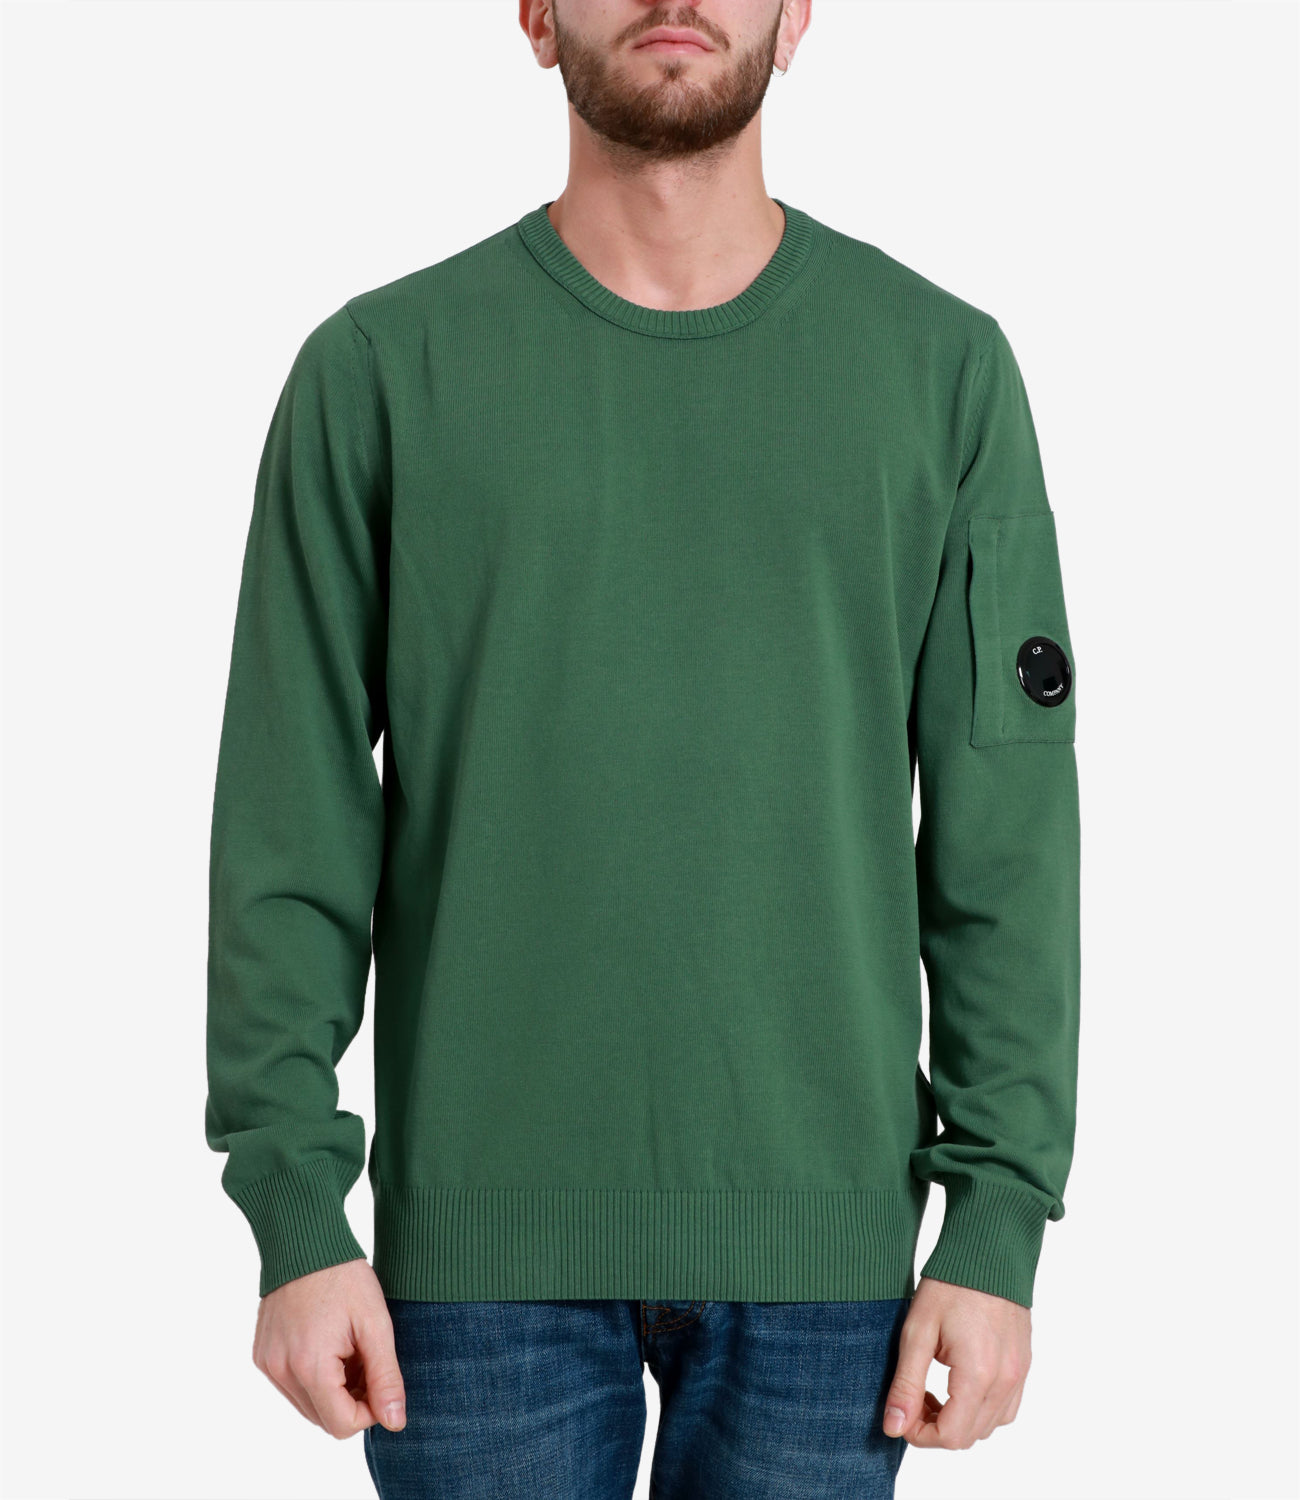 C.P. Company | Green Sweater